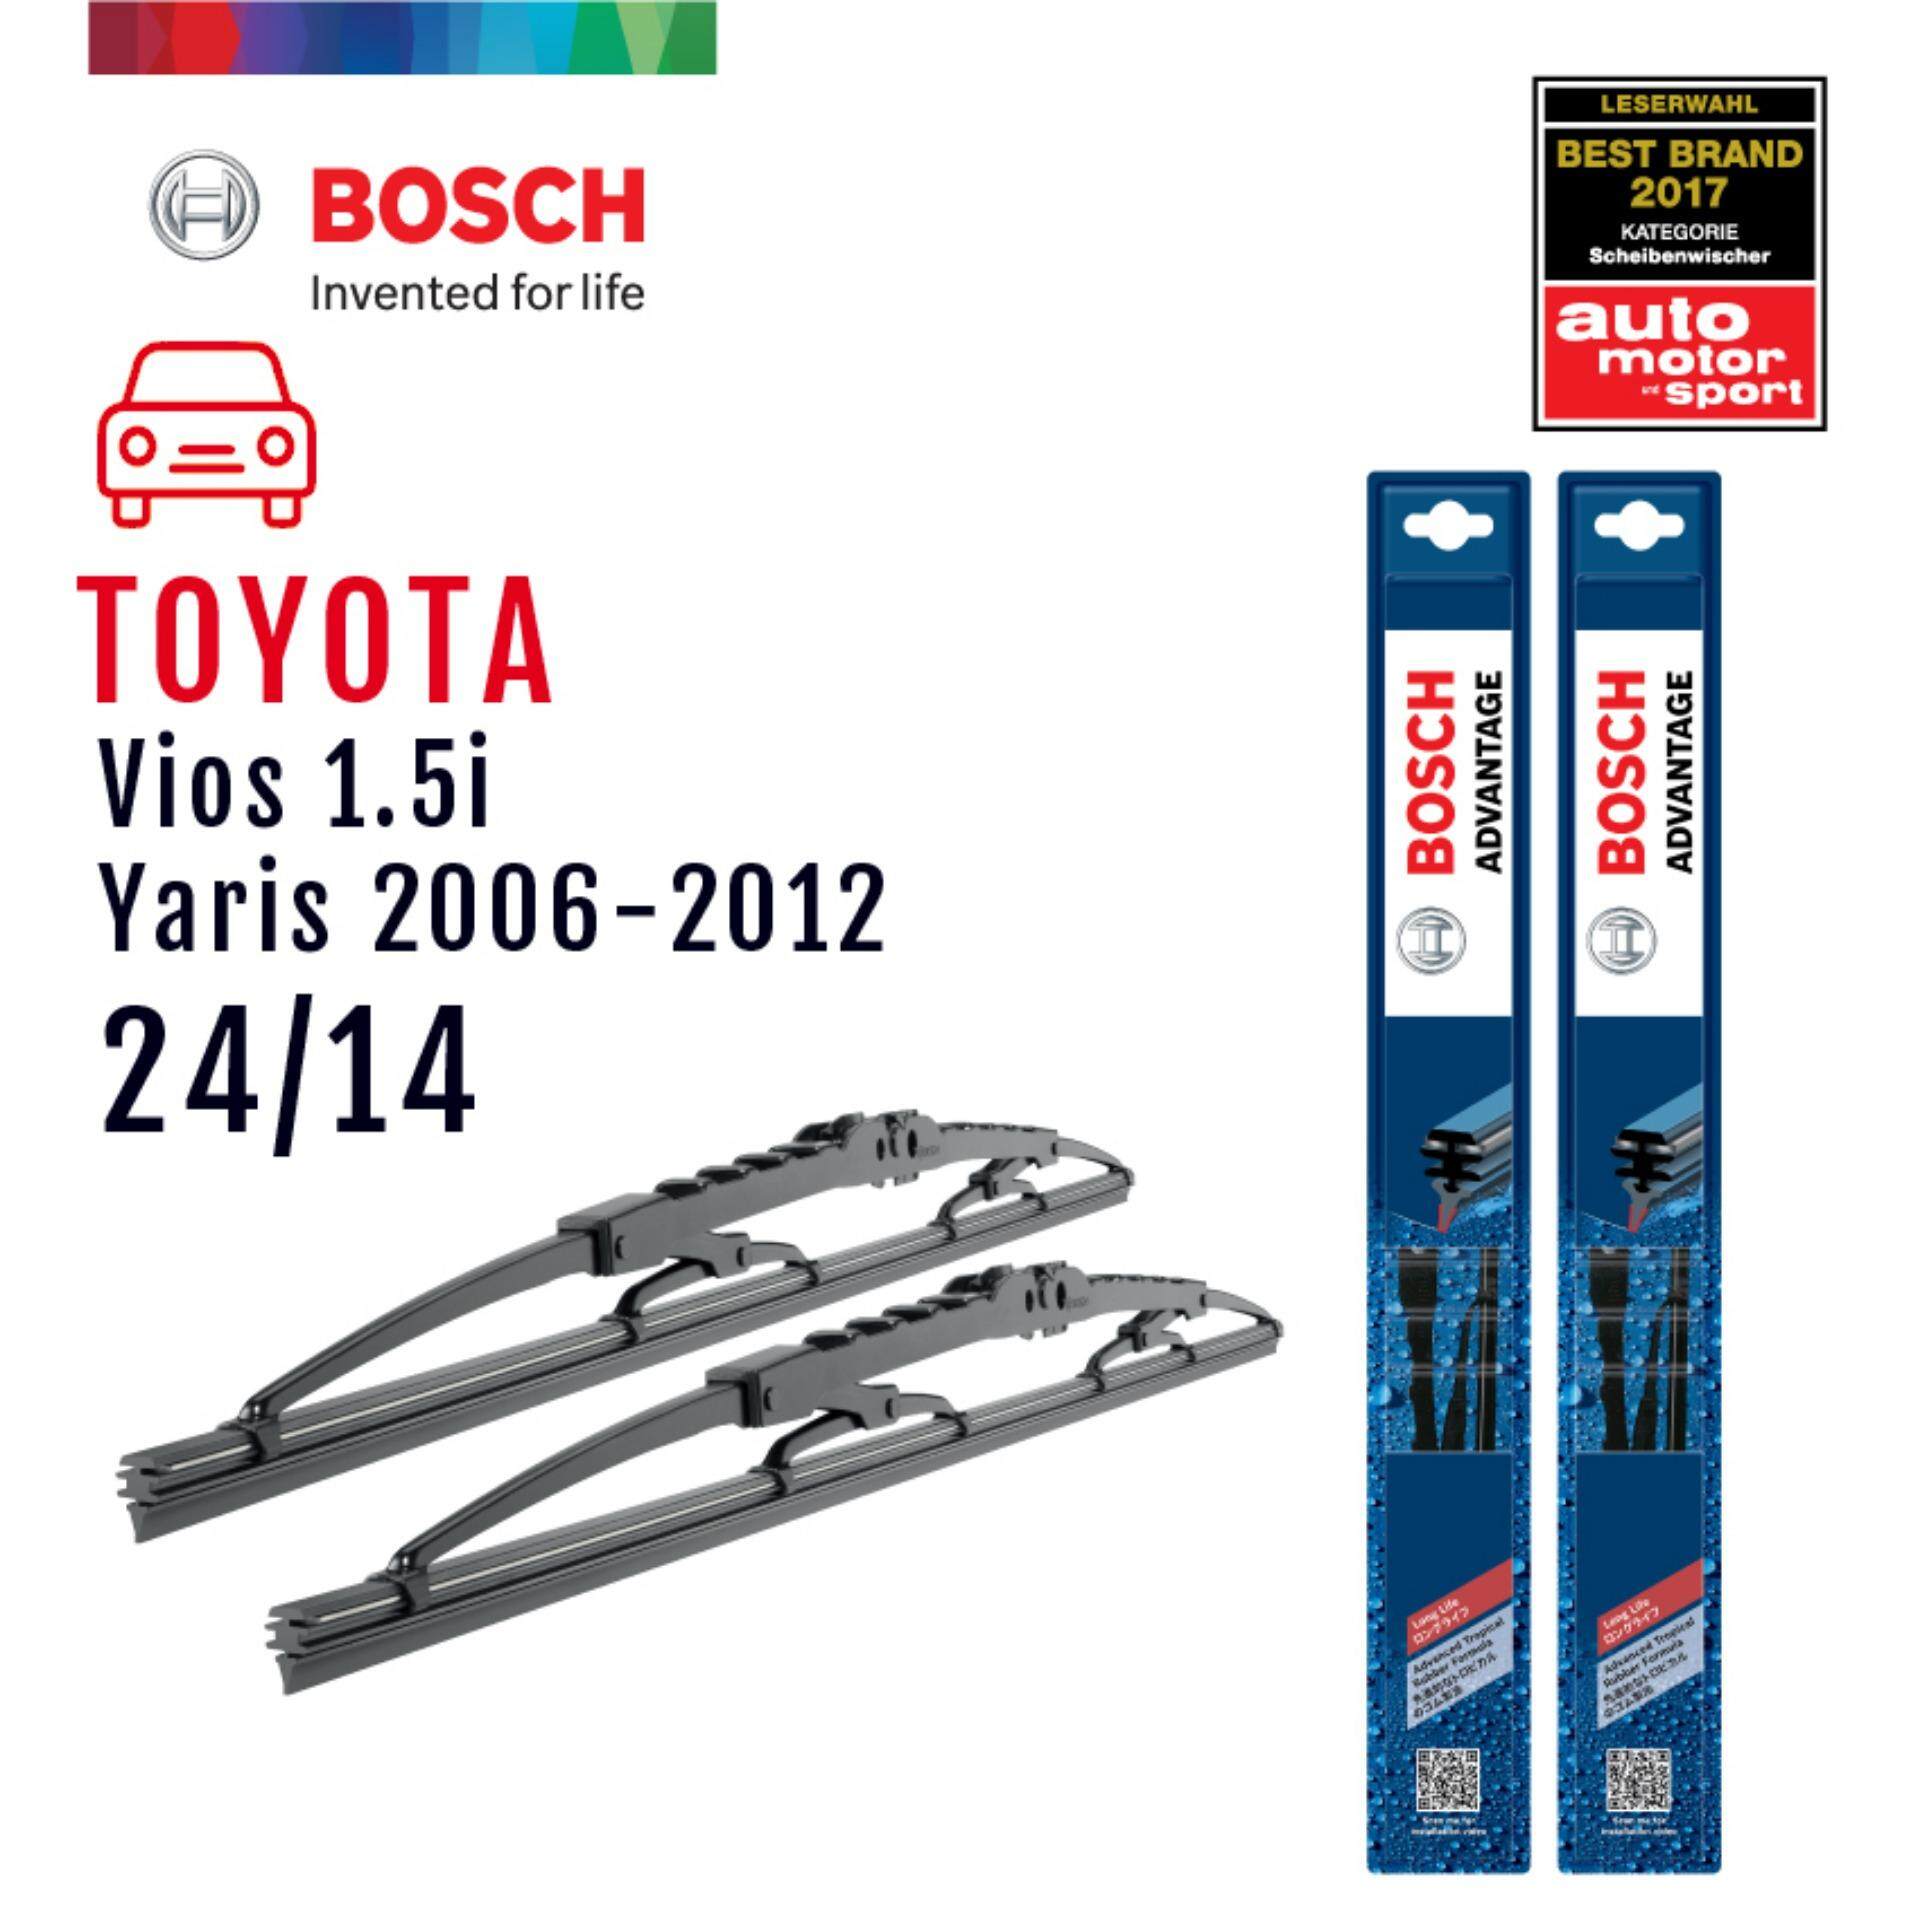 Bosch ใบปัดน้ำฝน Toyota Yaris ปี 2006 เป็นต้นไป ขนาด 24/14 นิ้ว รุ่น Advantage